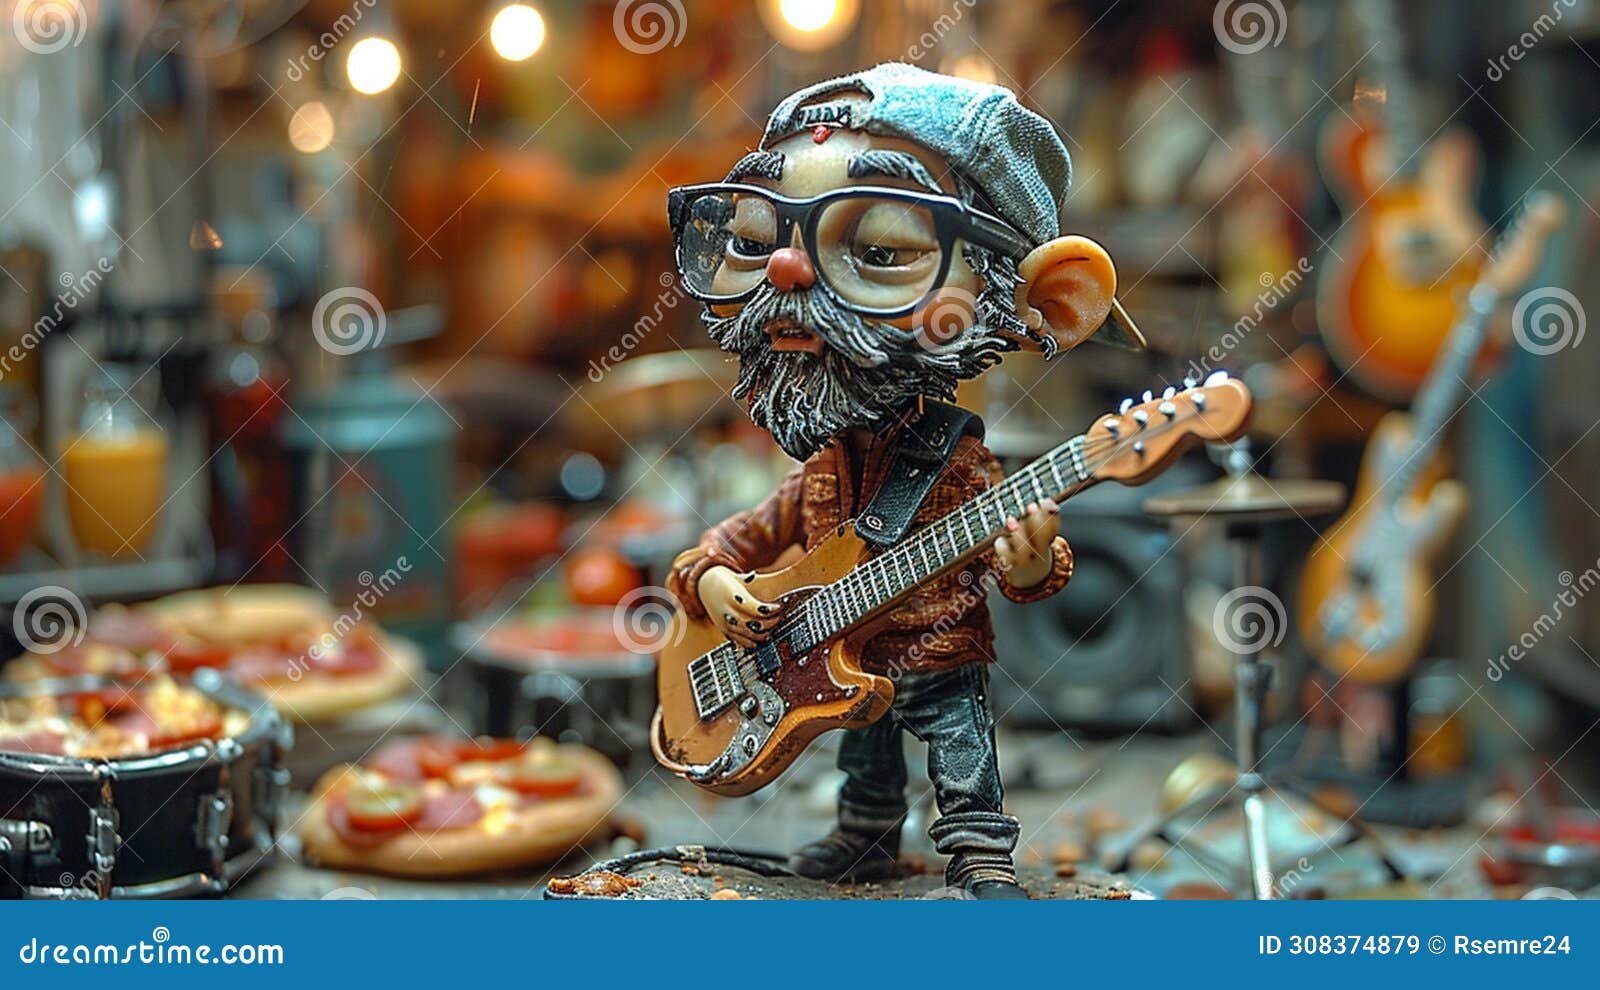 a miniature rockstar: elderly guitarist figurine captures the spirit of music